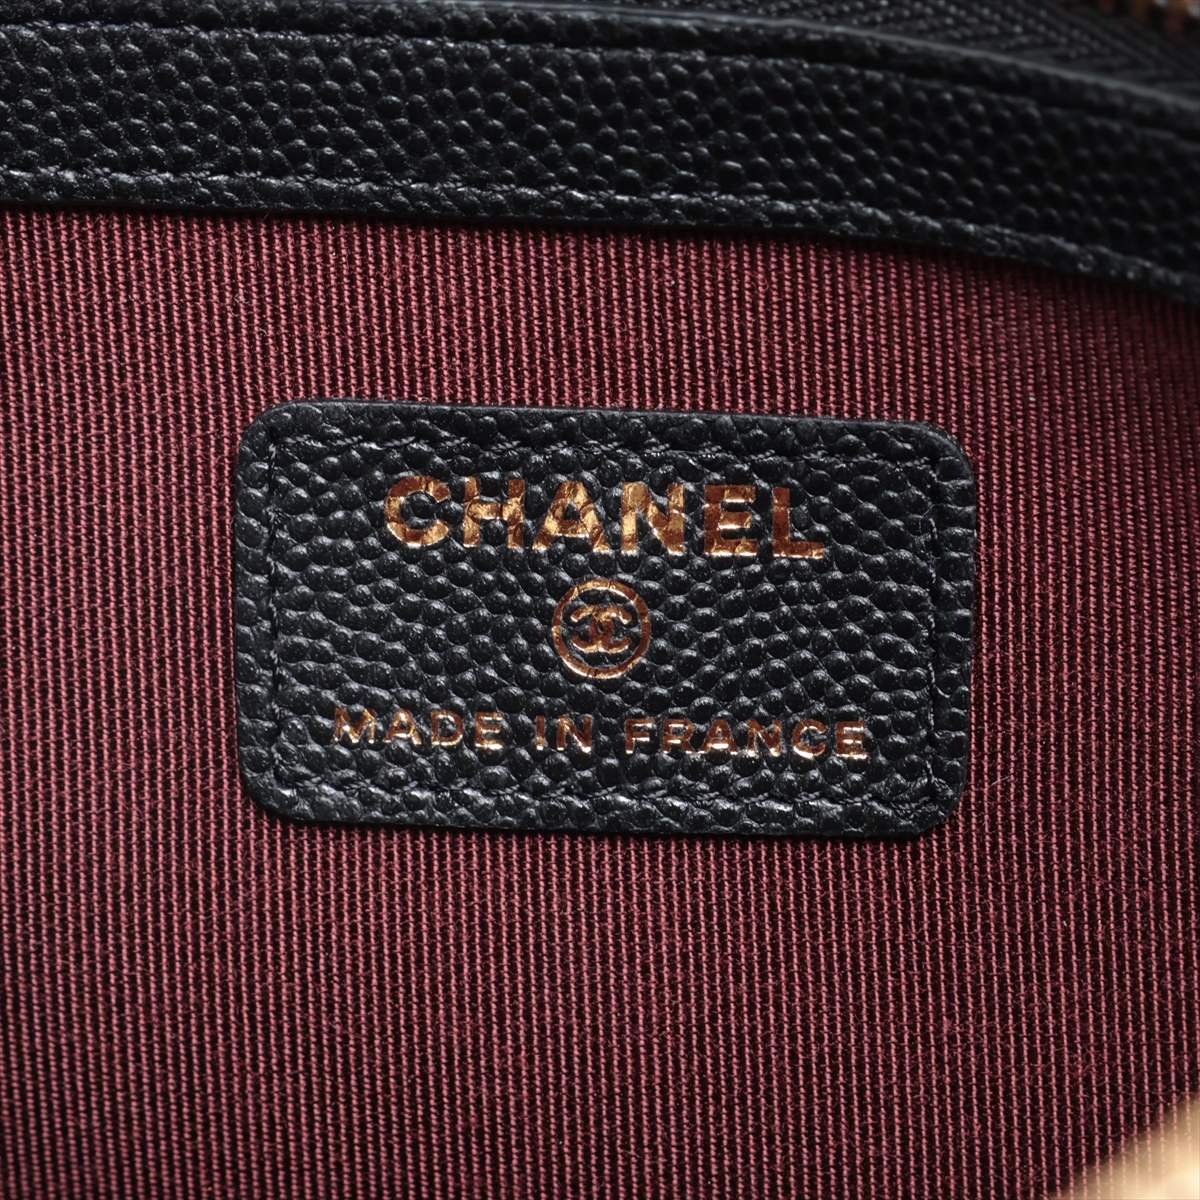 Chanel Matrasse Caviar S Clutch Bag Black G  31st